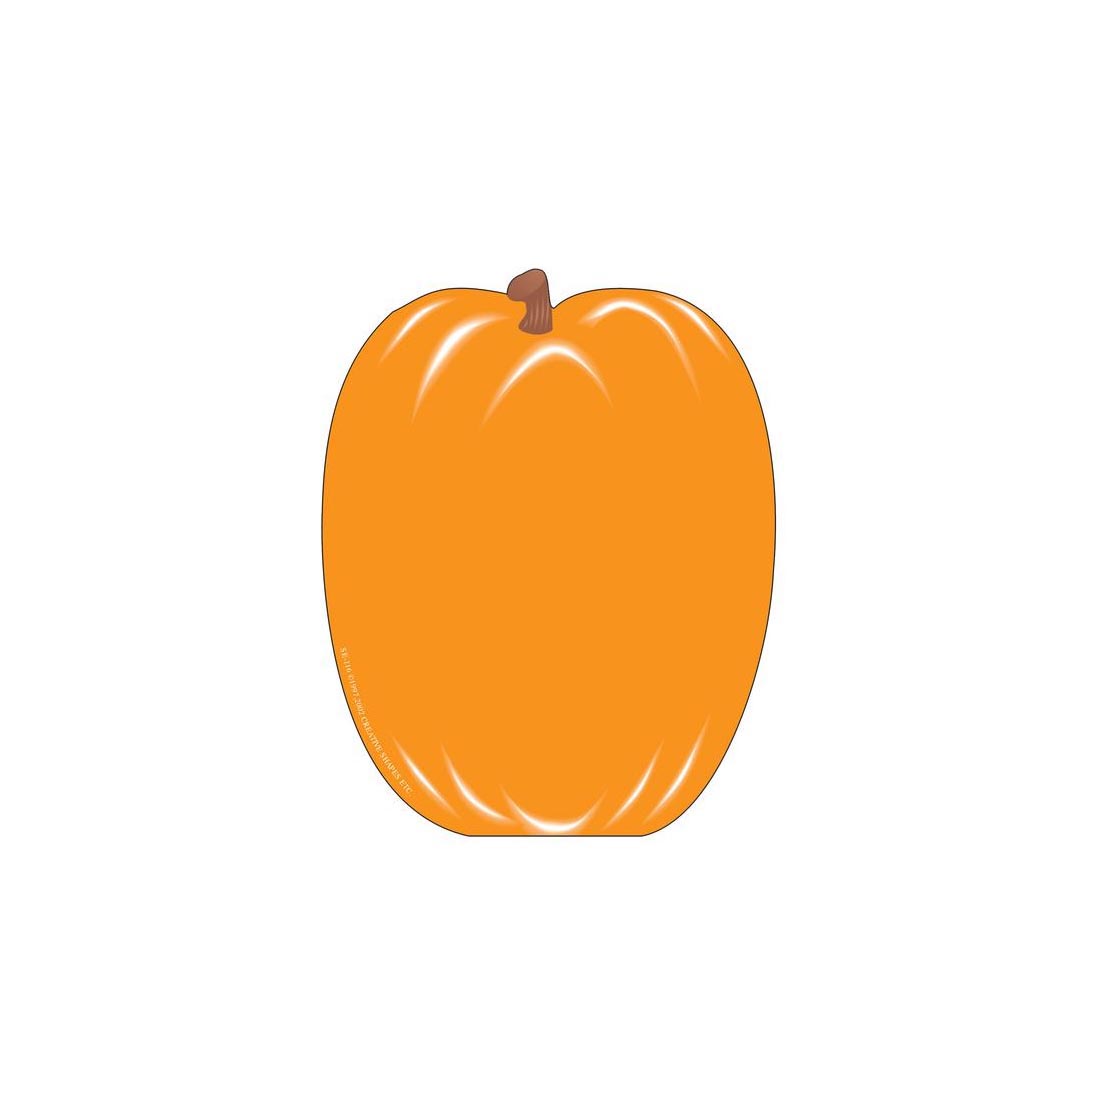 Pumpkin Notepad by Creative Shapes